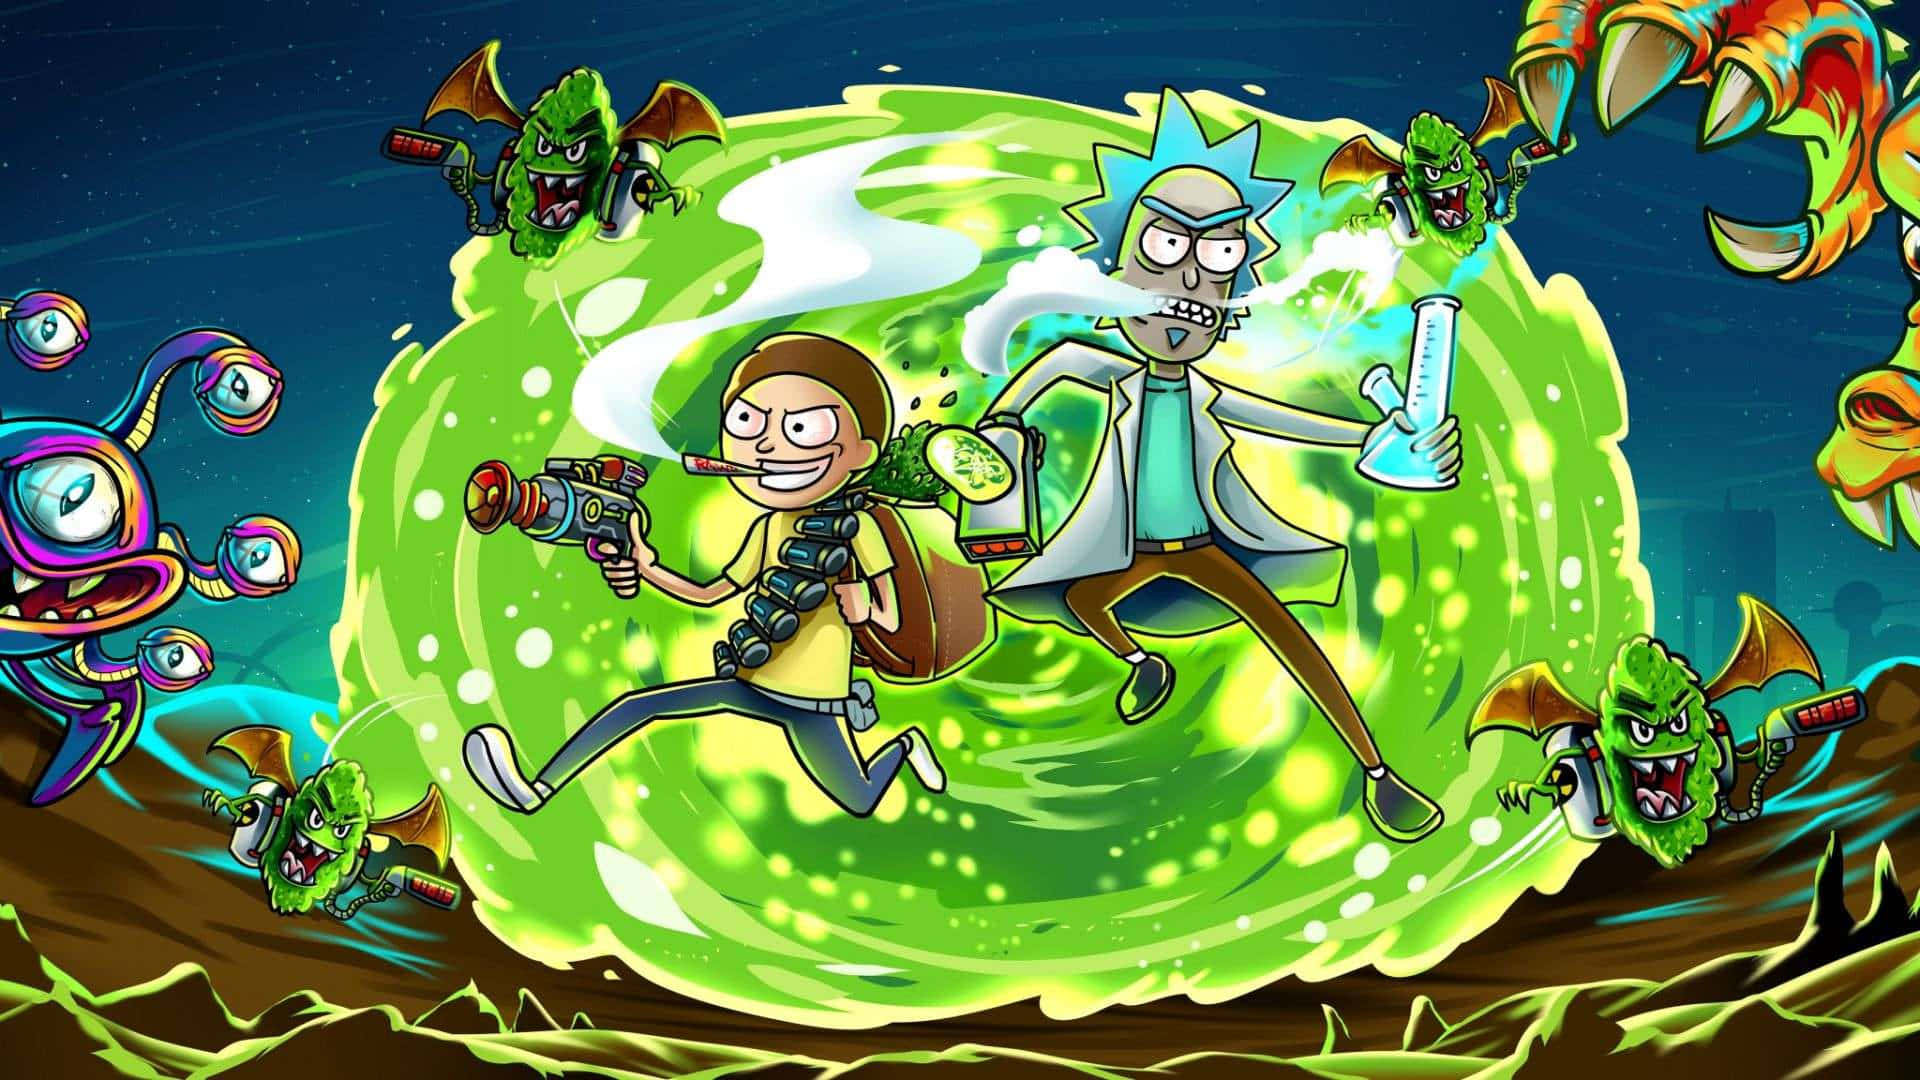 Escenade Lucha De Rick And Morty En El Portal Alienígena - Computadora Portátil. Fondo de pantalla